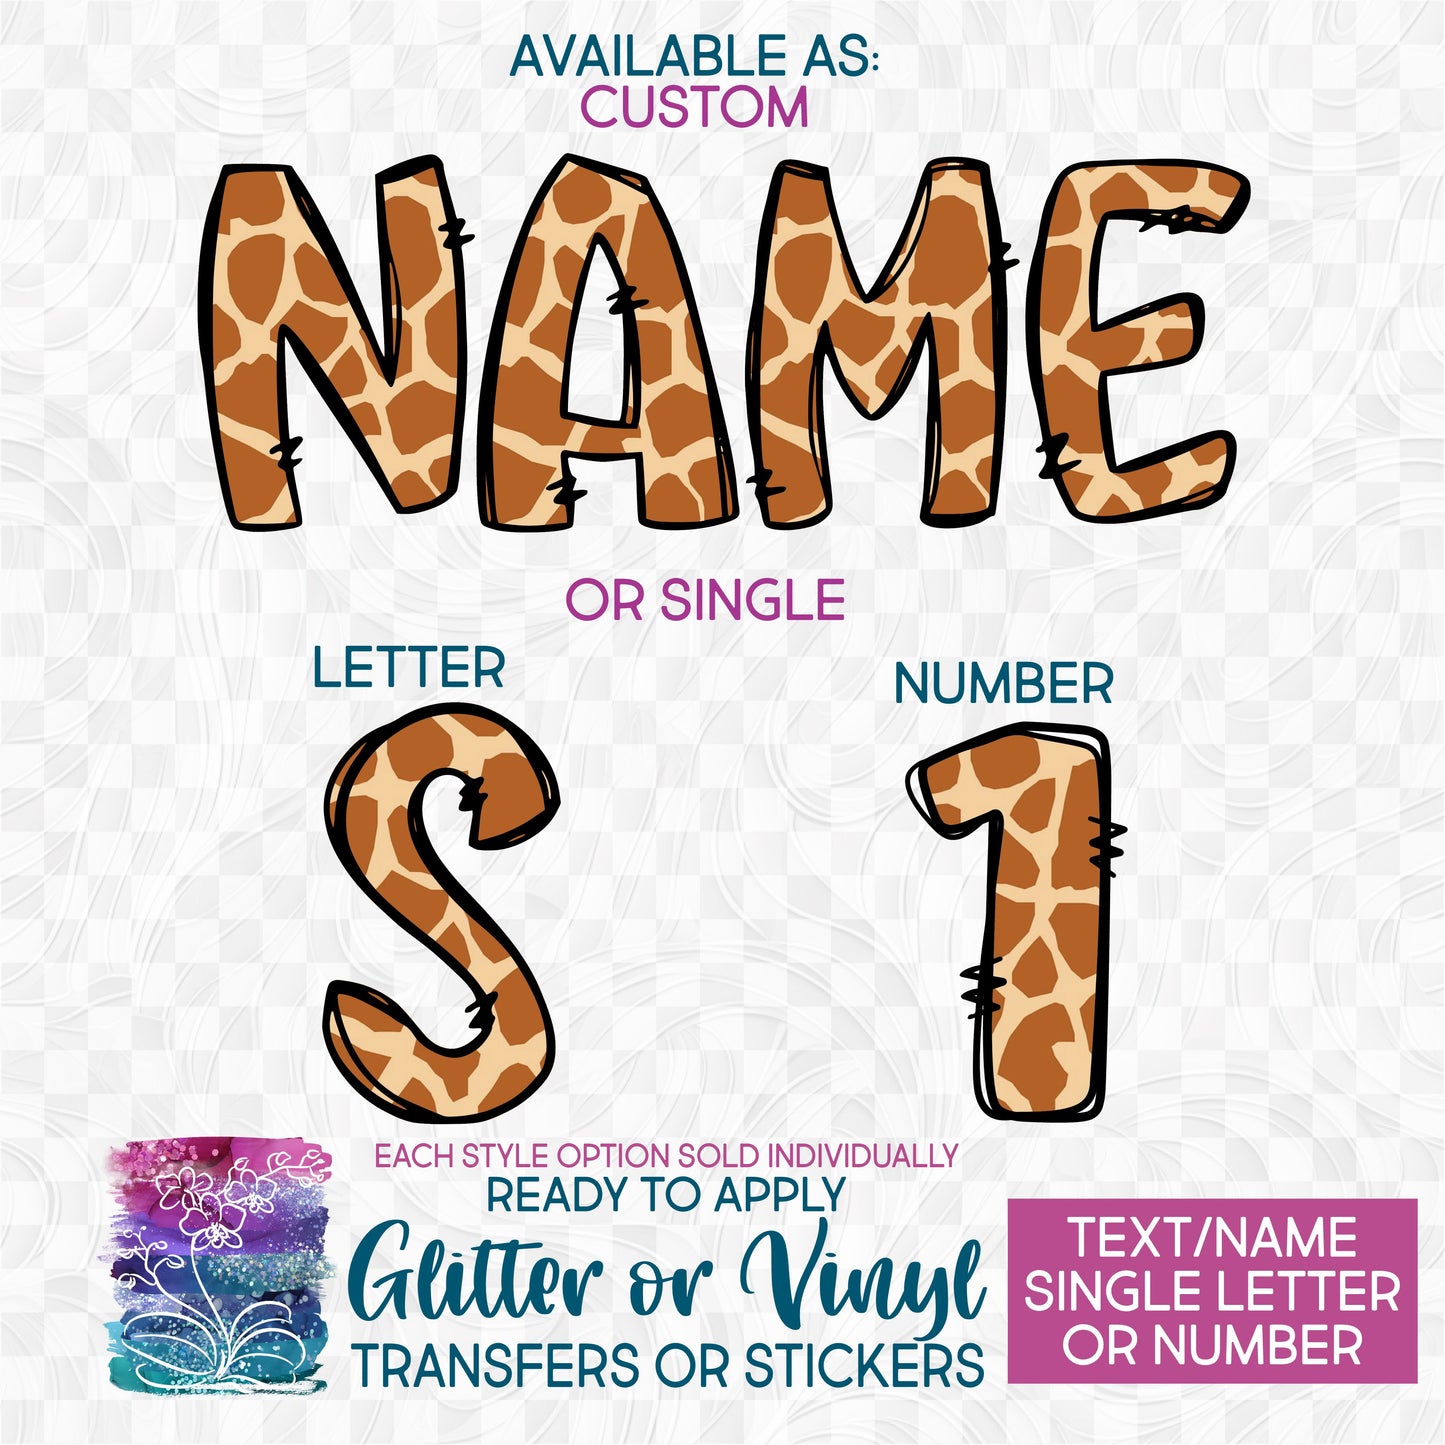 (s211-1D) Giraffe Letters Numbers Custom Name Text Glitter or Vinyl Iron-On Transfer or Sticker